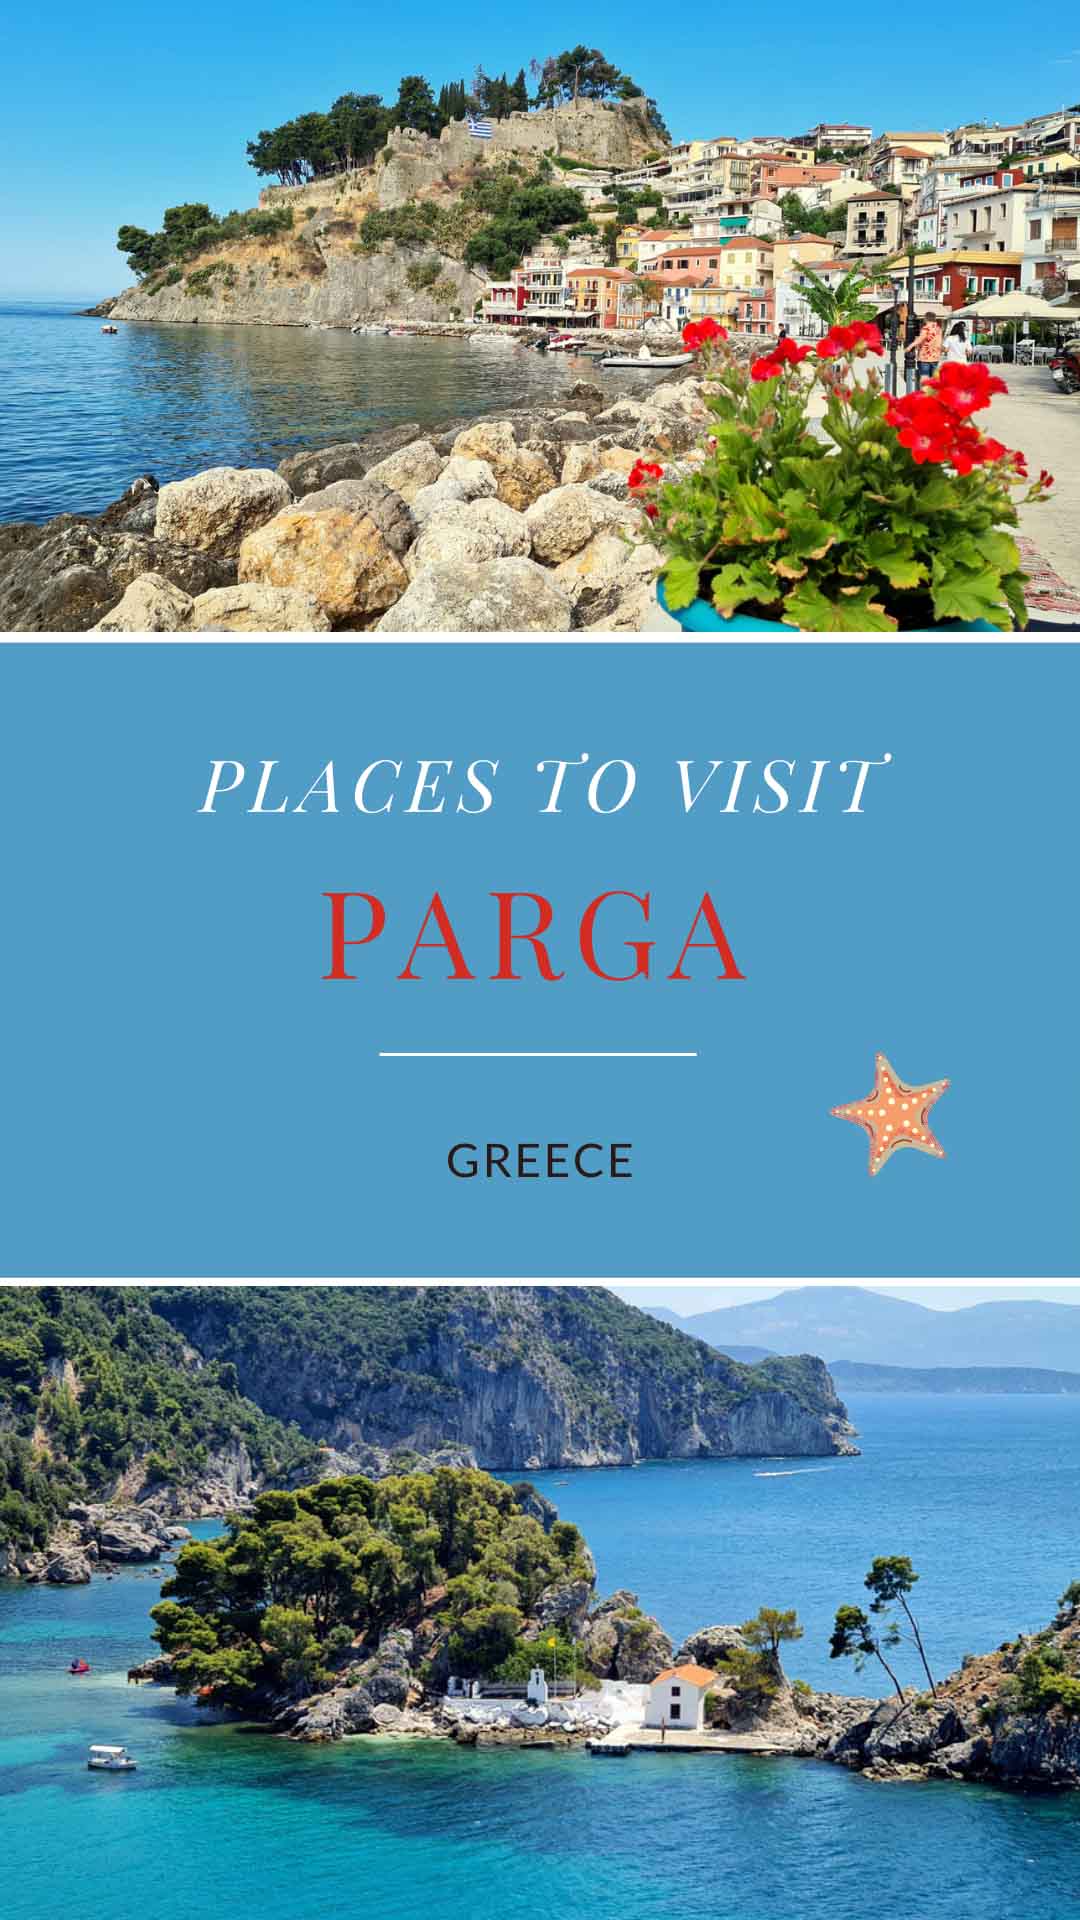 Read more about Parga